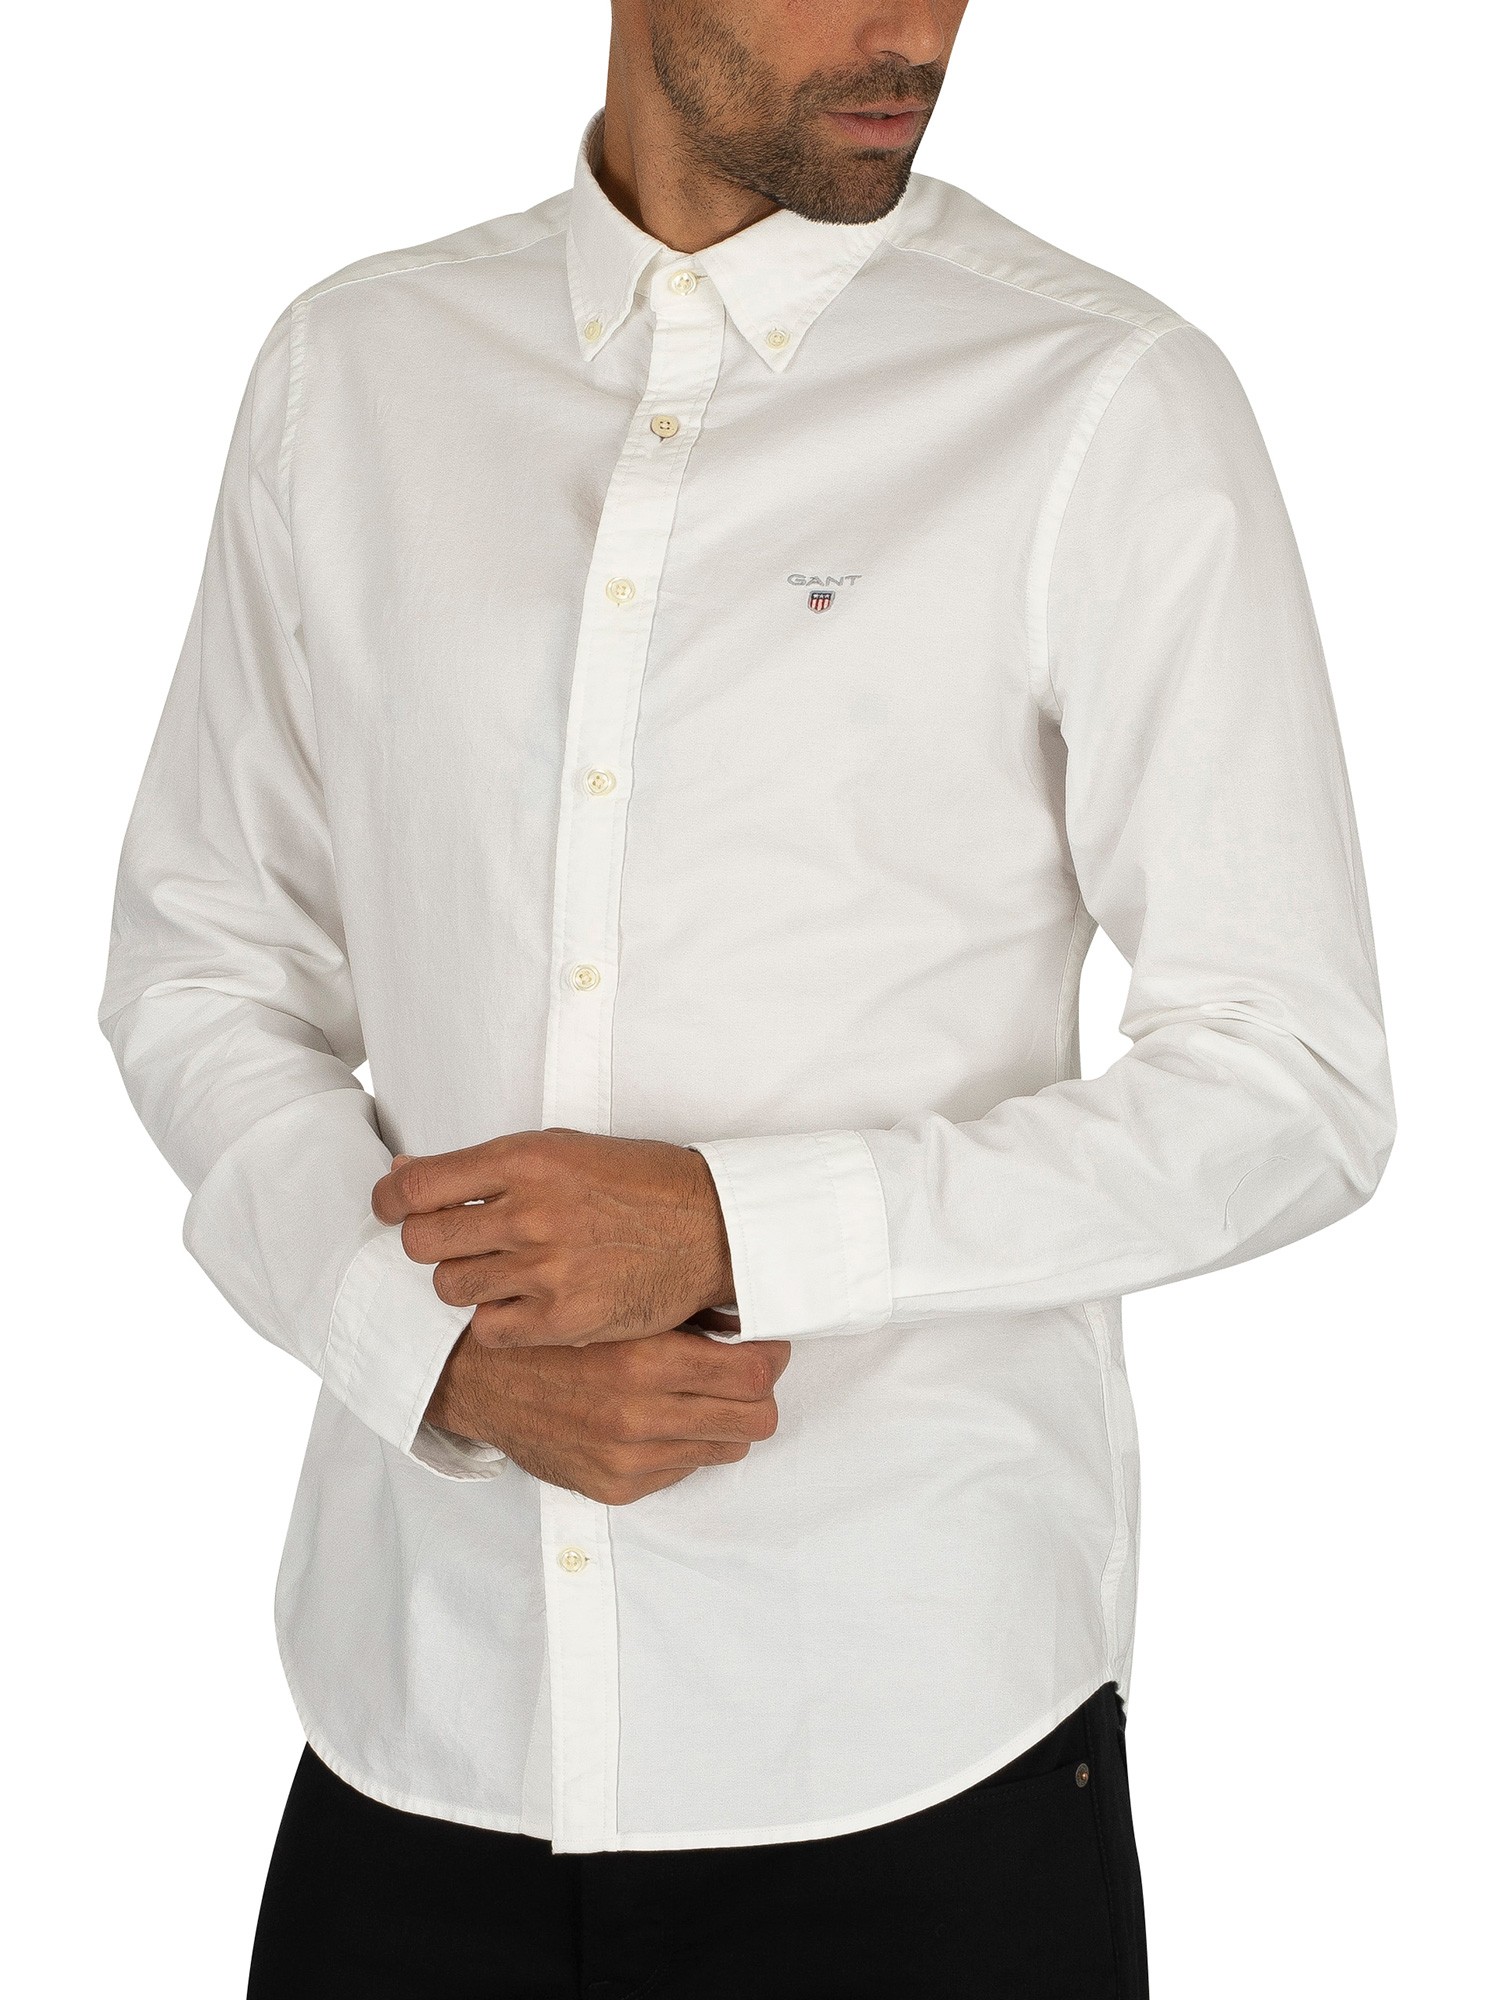 GANT The Slim Oxford Shirt - White | Standout